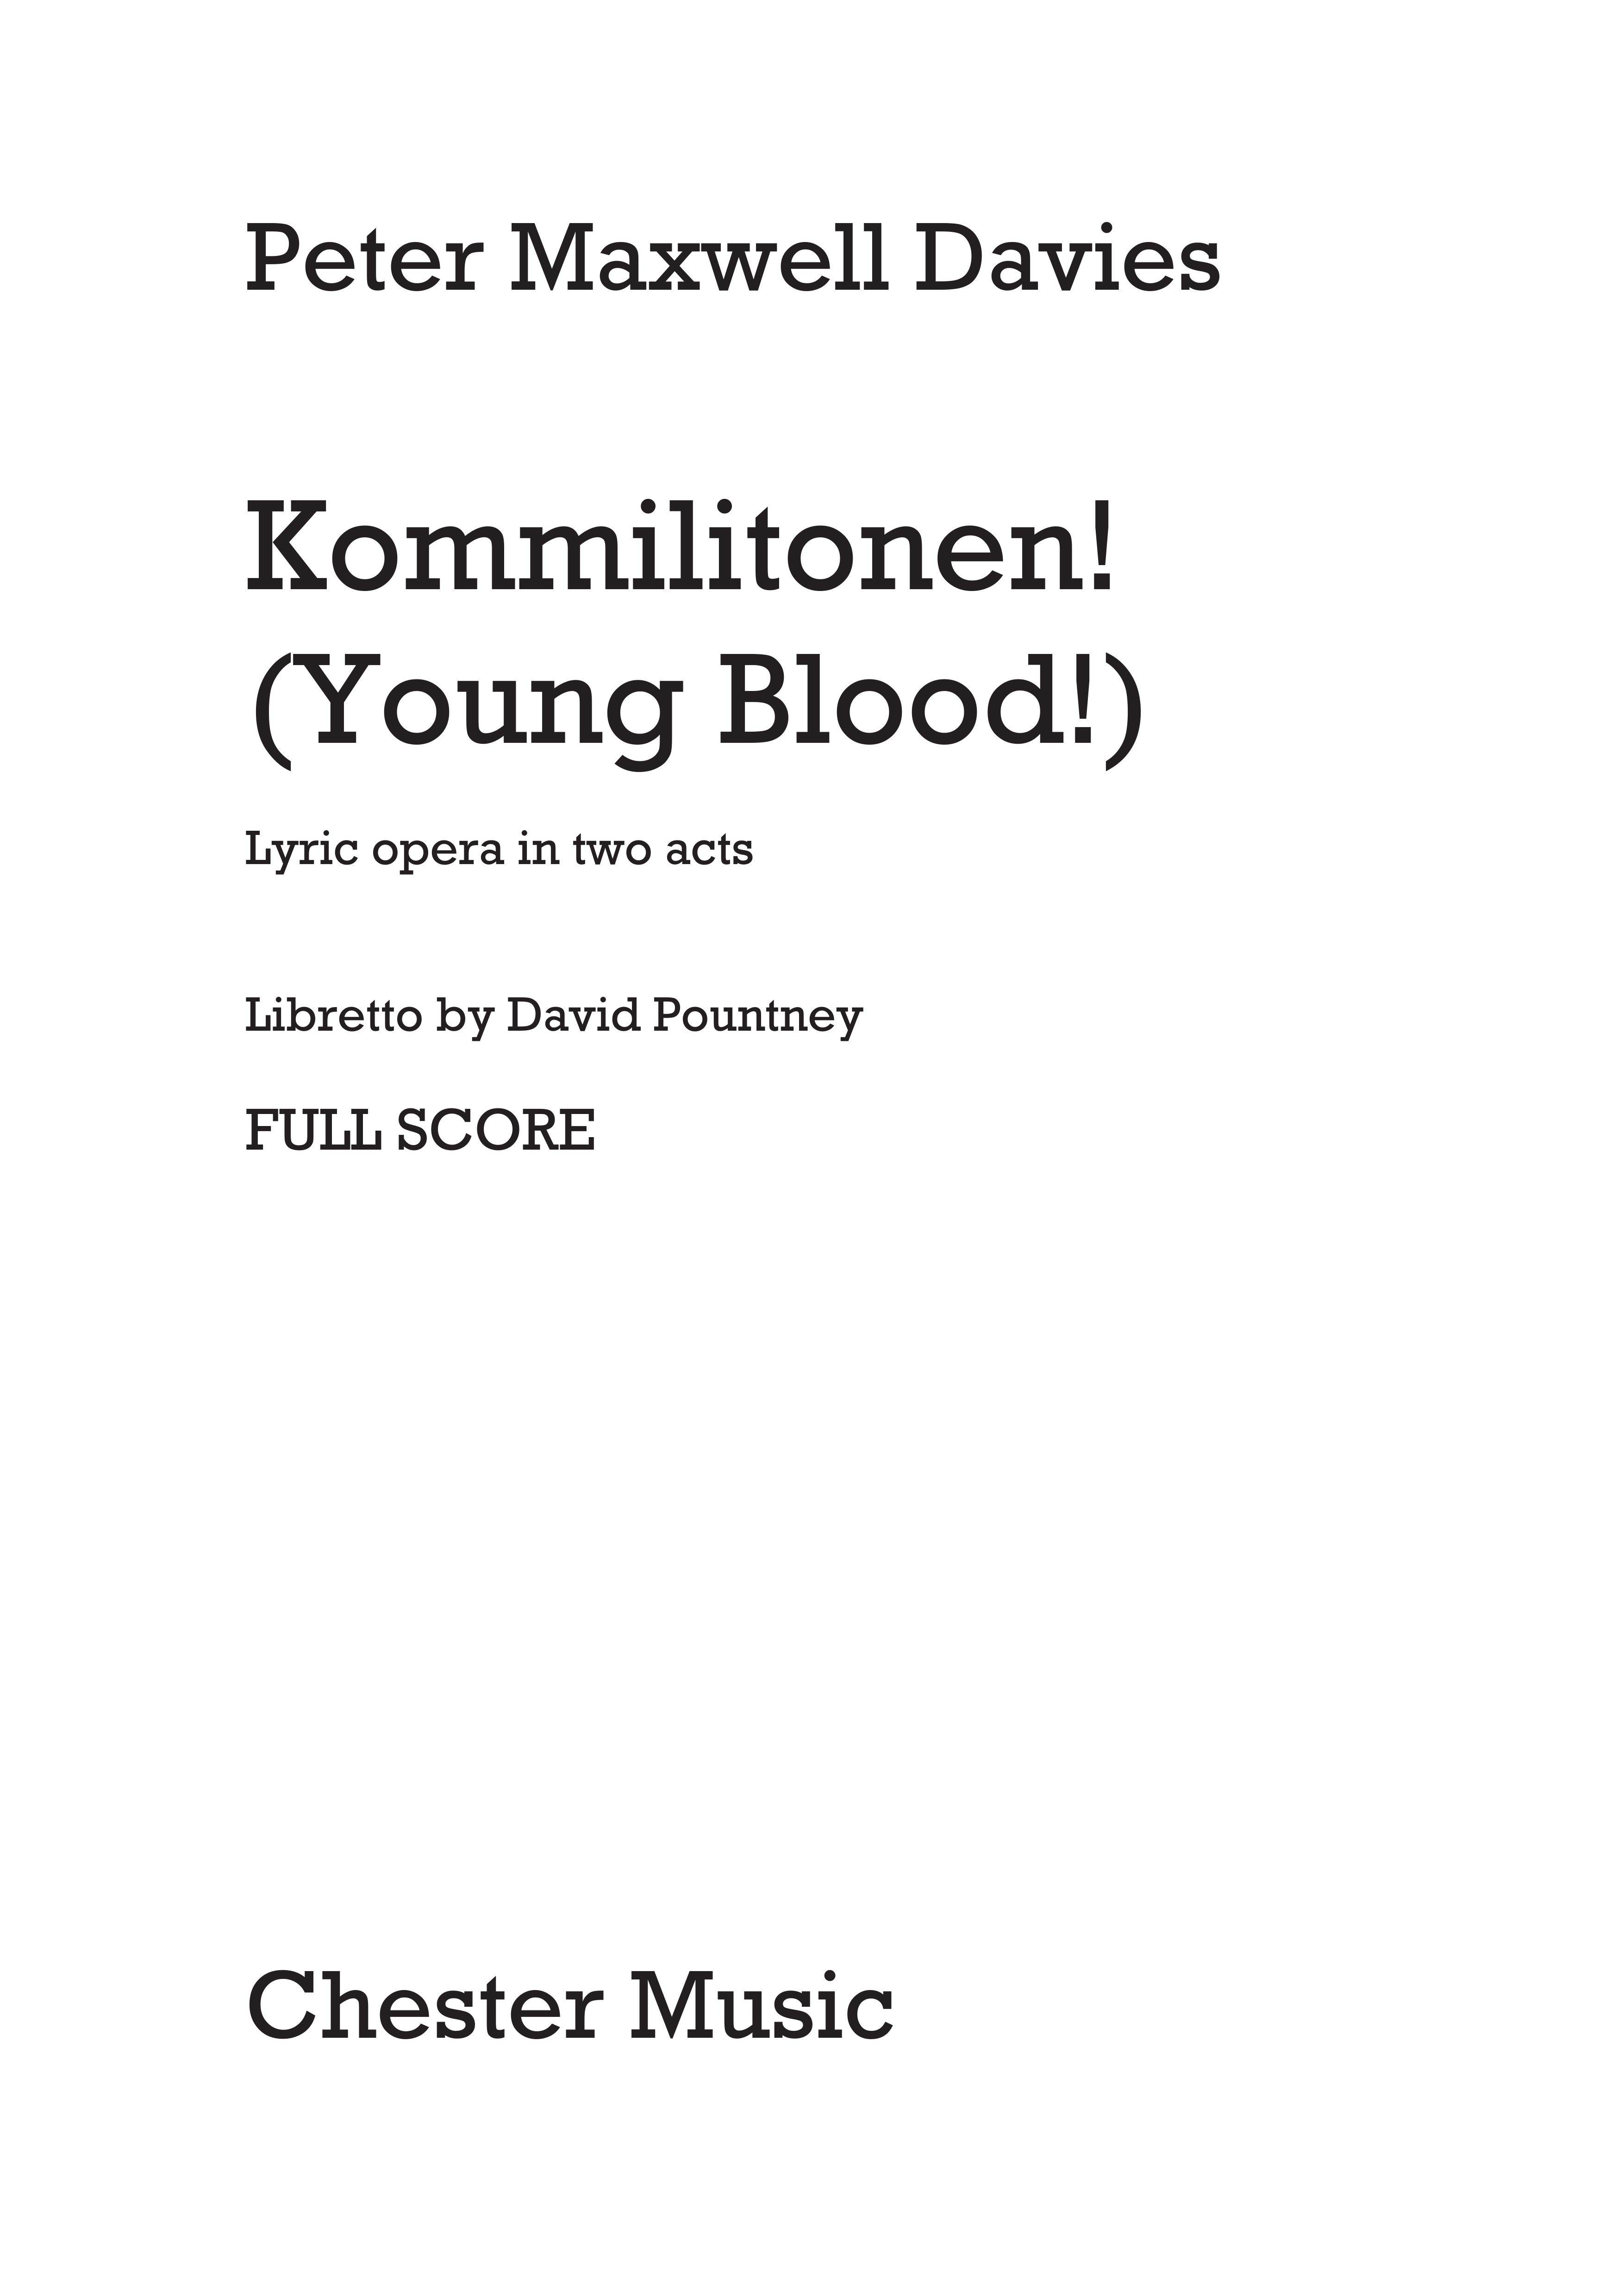 Peter Maxwell Davies: Kommilitonen! (Young Blood!) - Full Score: Opera: Score